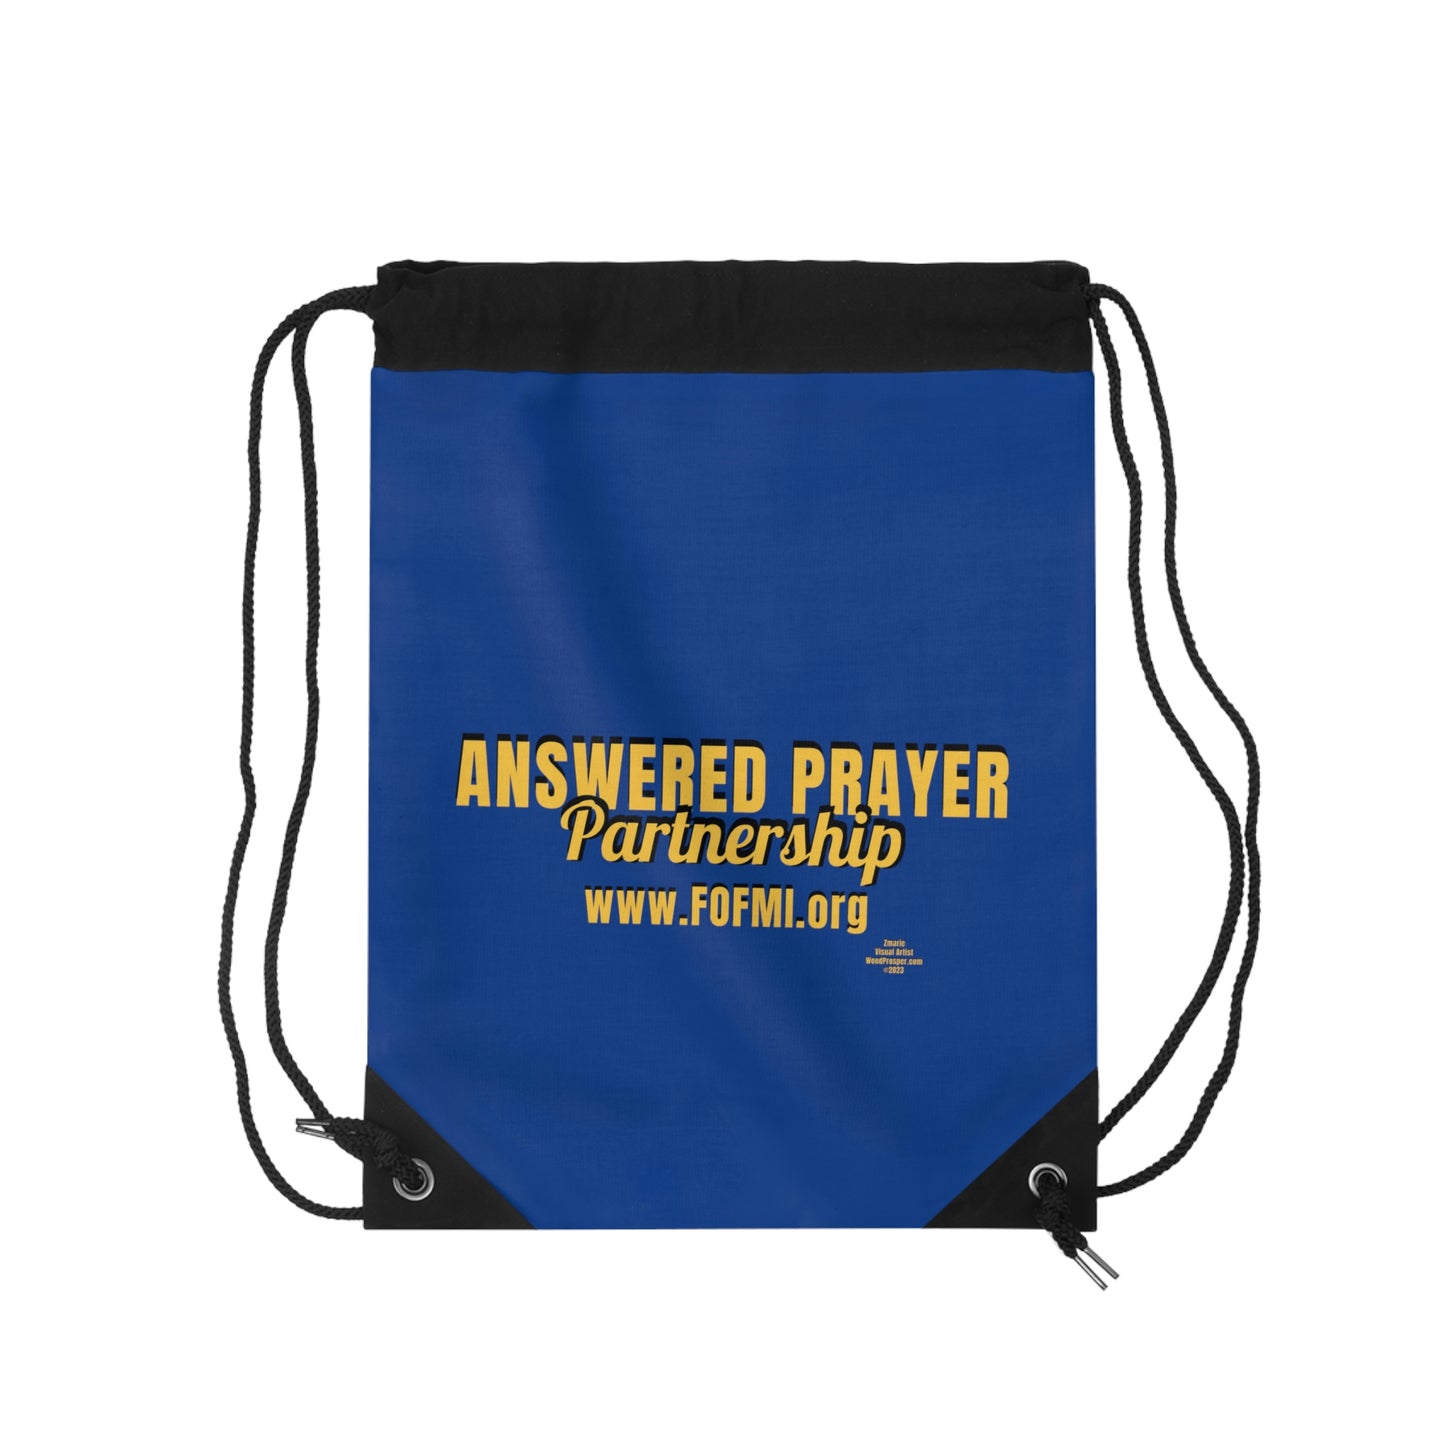 ANSWERED PRAYER PARTNERSHIP Drawstring Bag